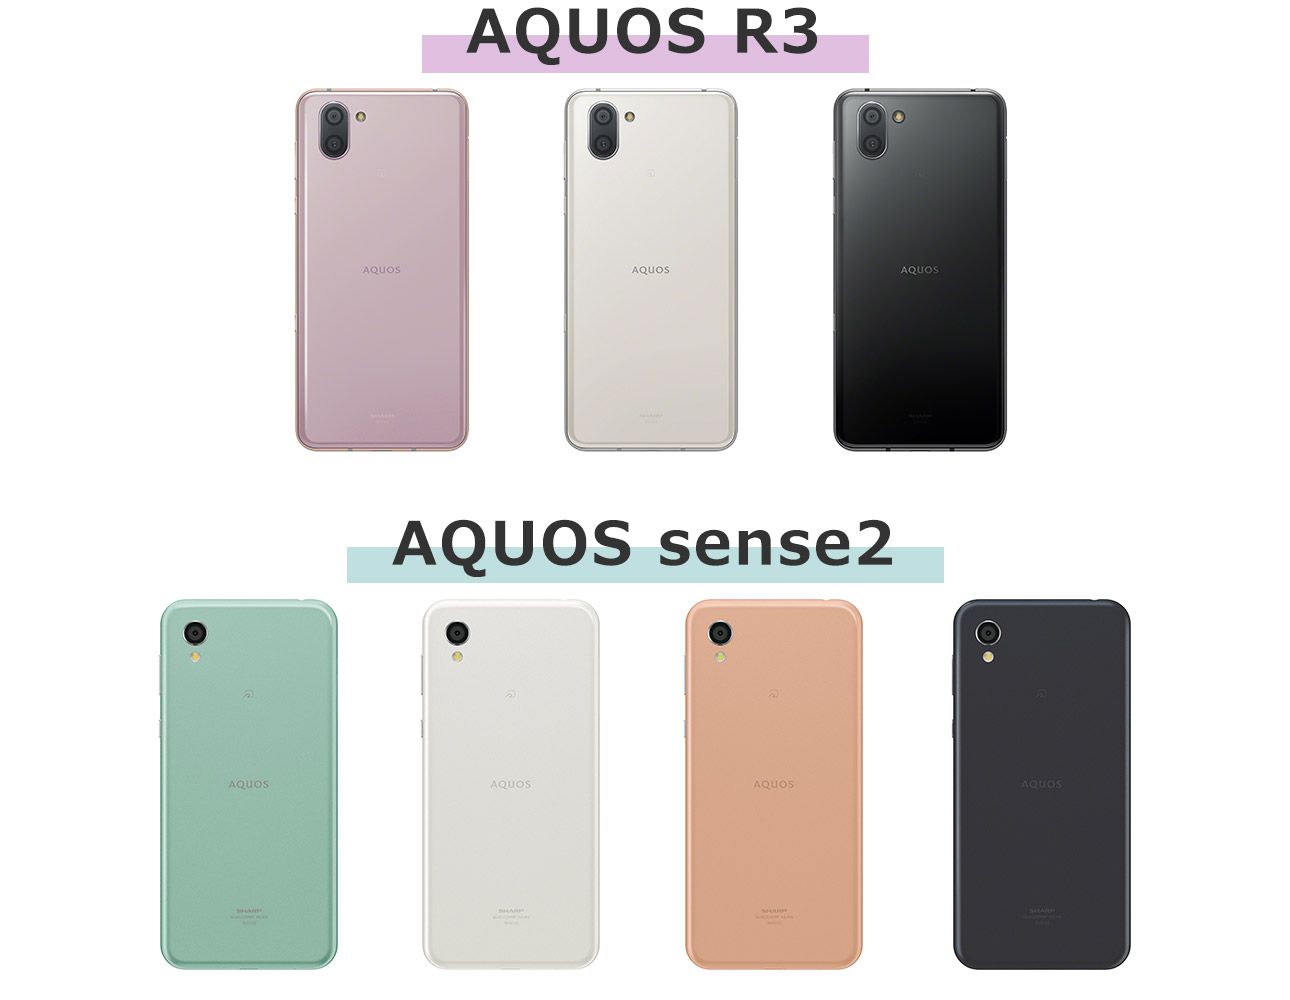 AQUOS R3とAQUOS sense2のカラーバリエーション